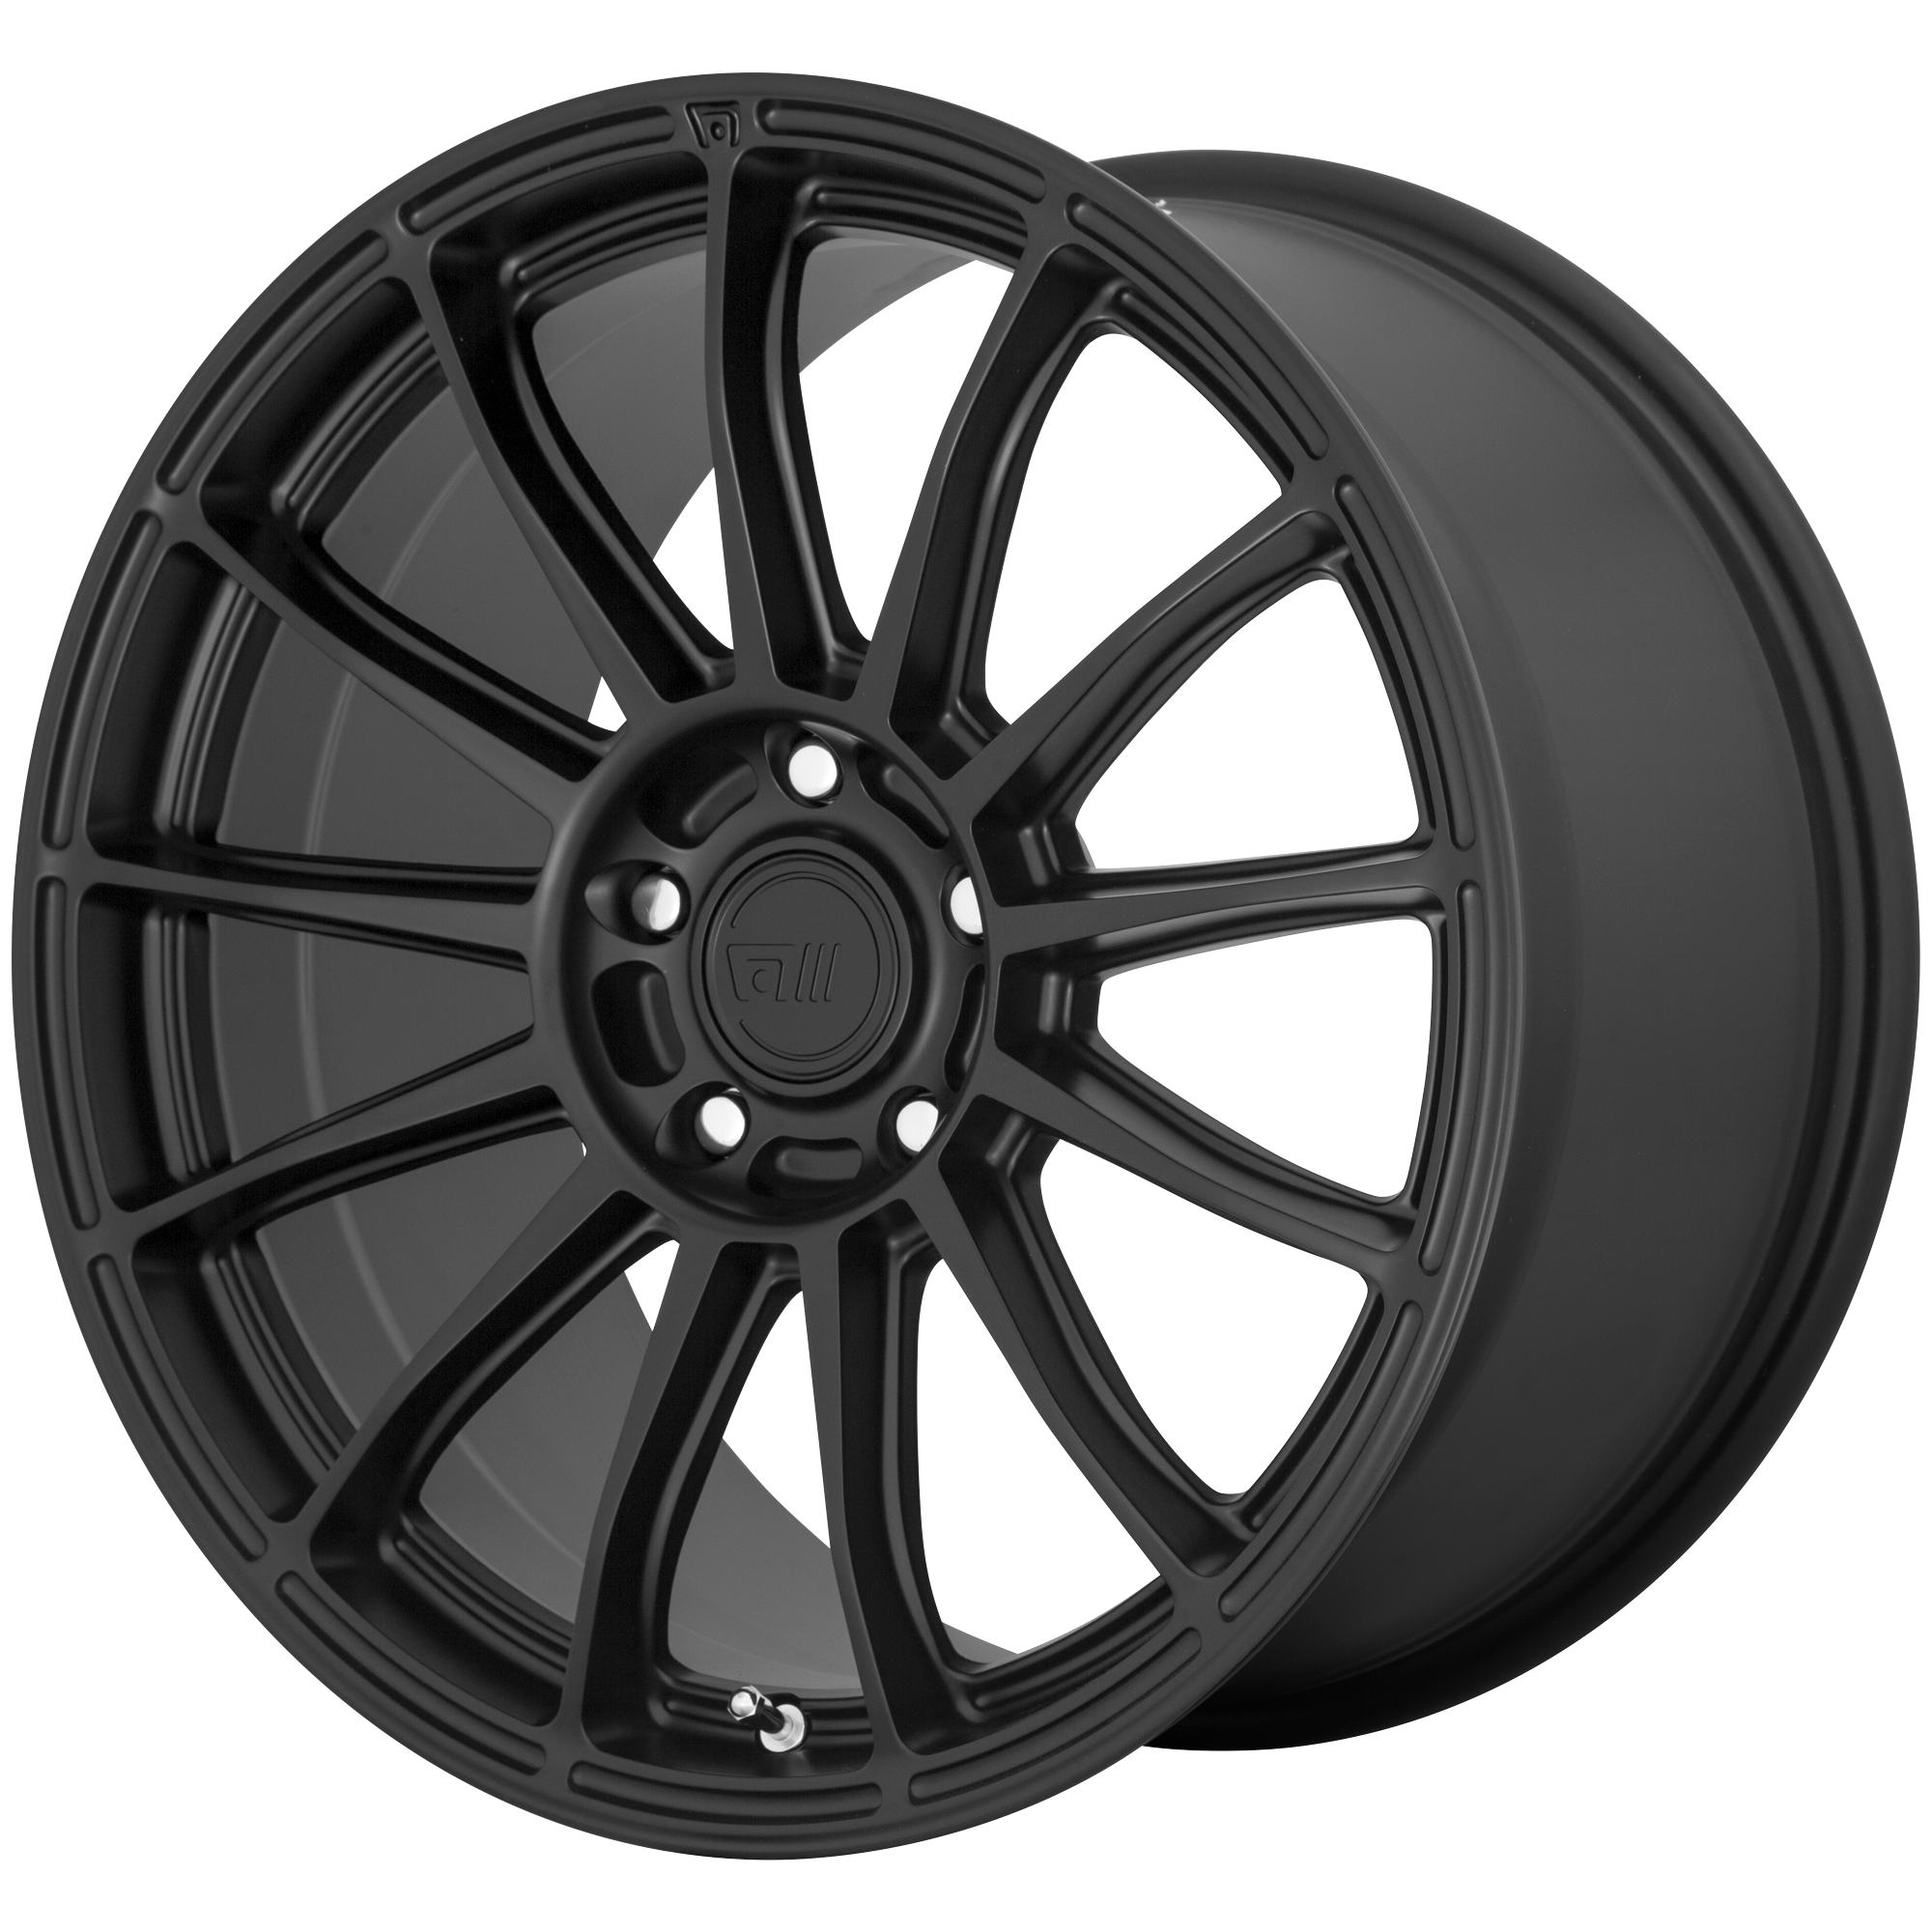 CS13 18x9.5 5x114.30 SATIN BLACK (35 mm) - Tires and Engine Performance